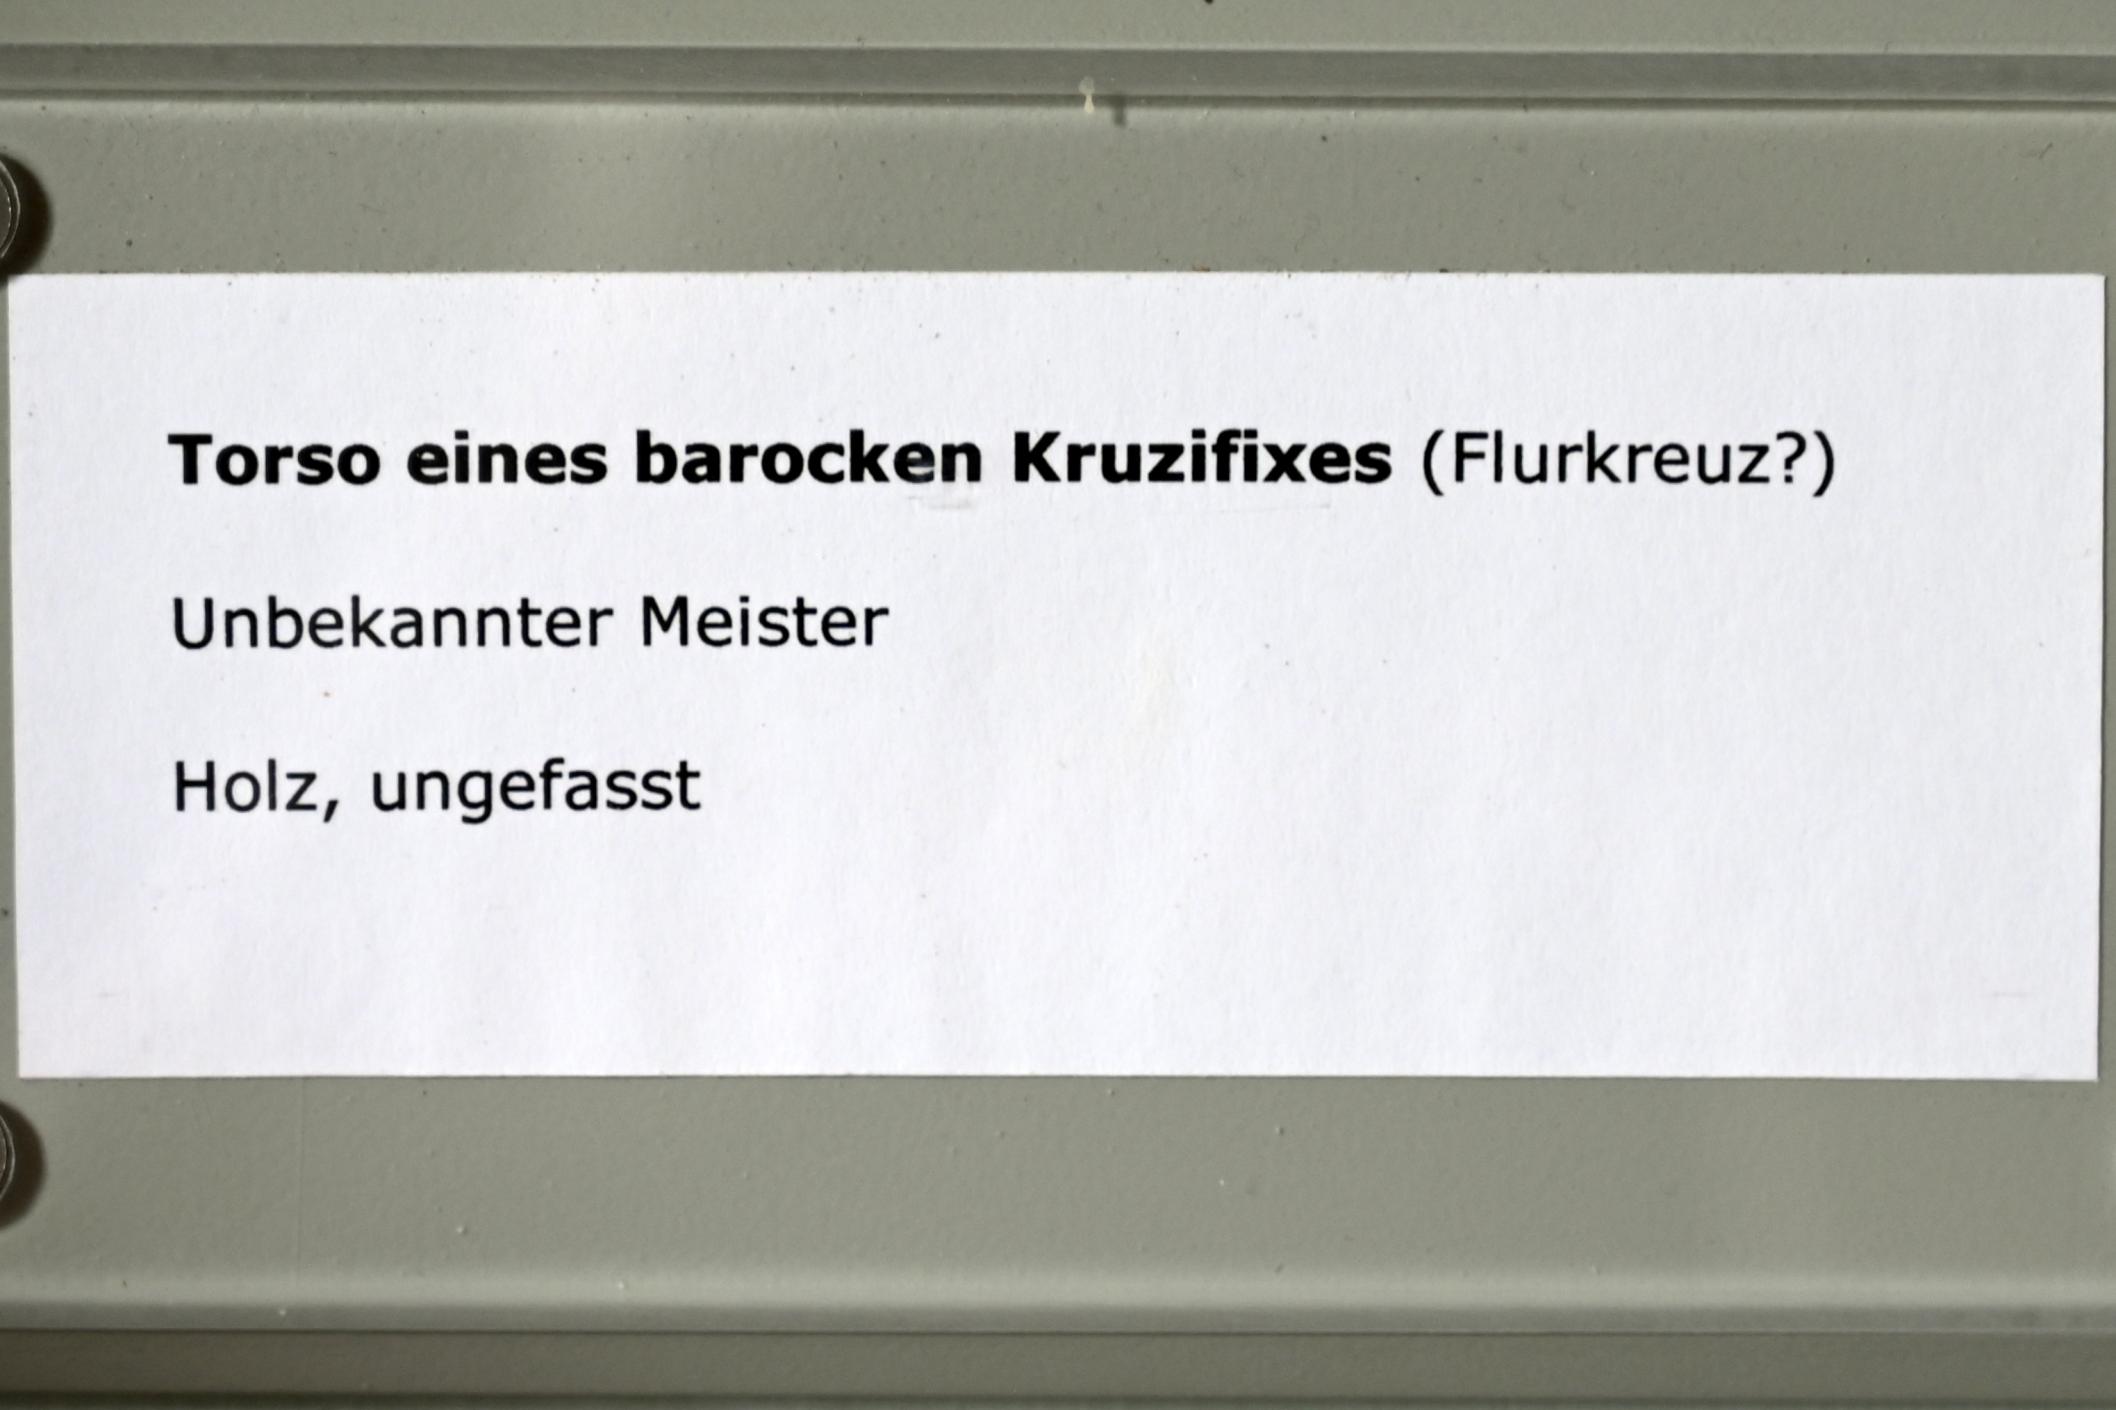 Torso eines barocken Kruzifixes (Flurkreuz?), Überlingen, Städtisches Museum, Kleiner Barocksaal, Undatiert, Bild 3/3